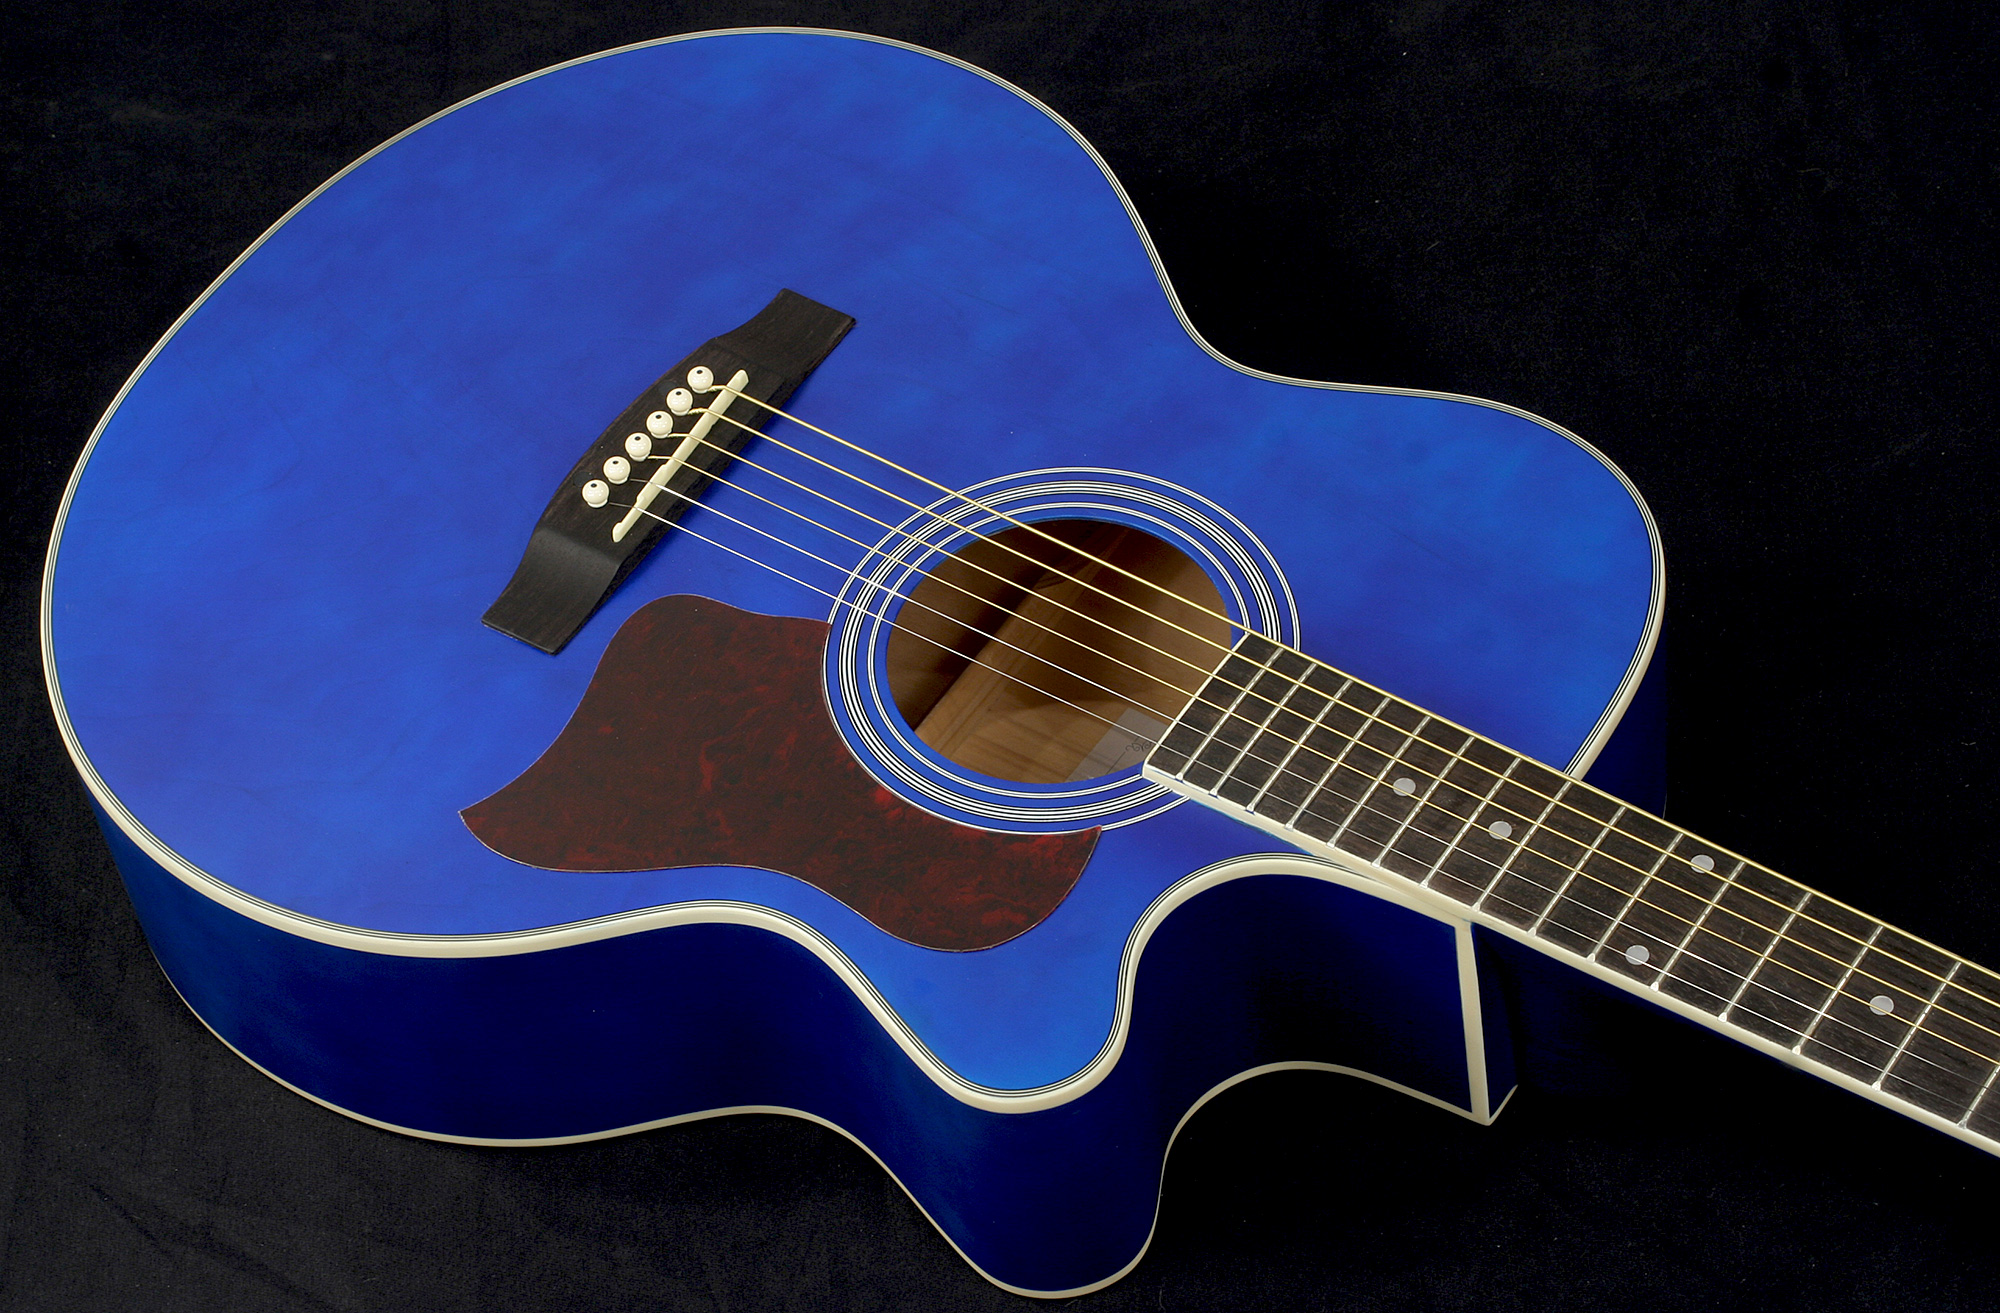 Eastone Sb20c-blu - Blue - Westerngitarre & electro - Variation 1